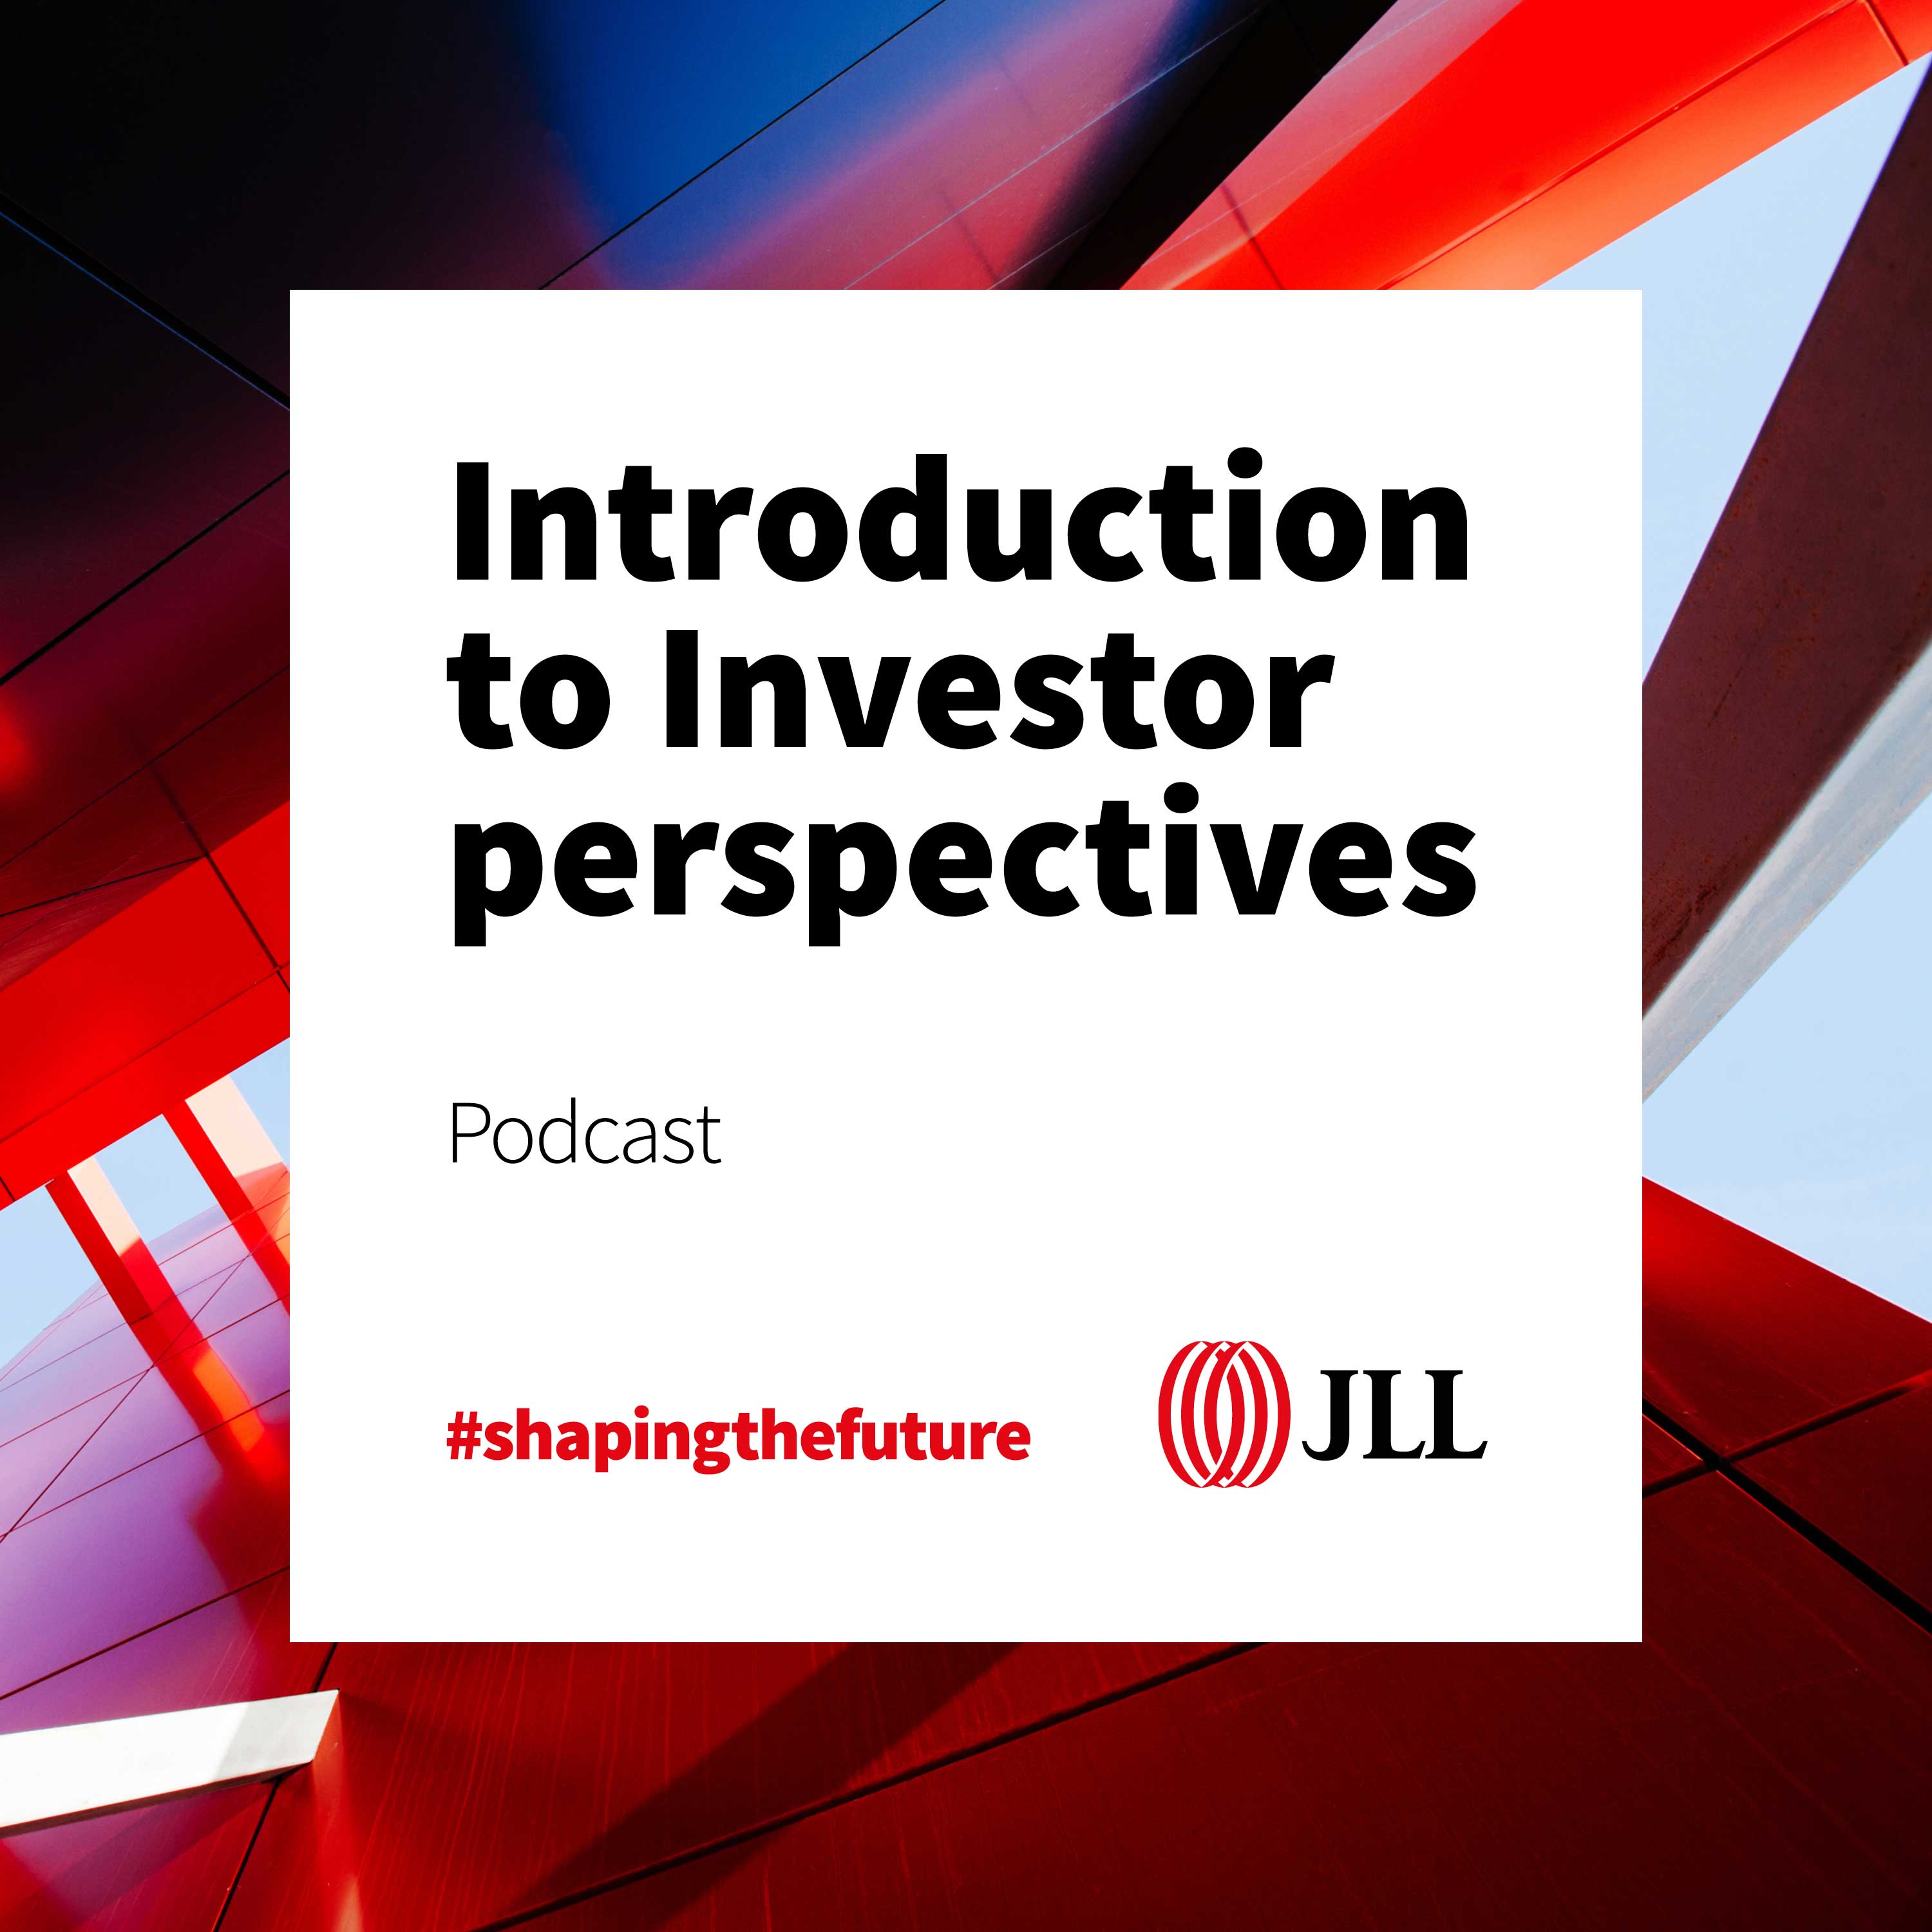 Artwork for podcast Investor perspectives